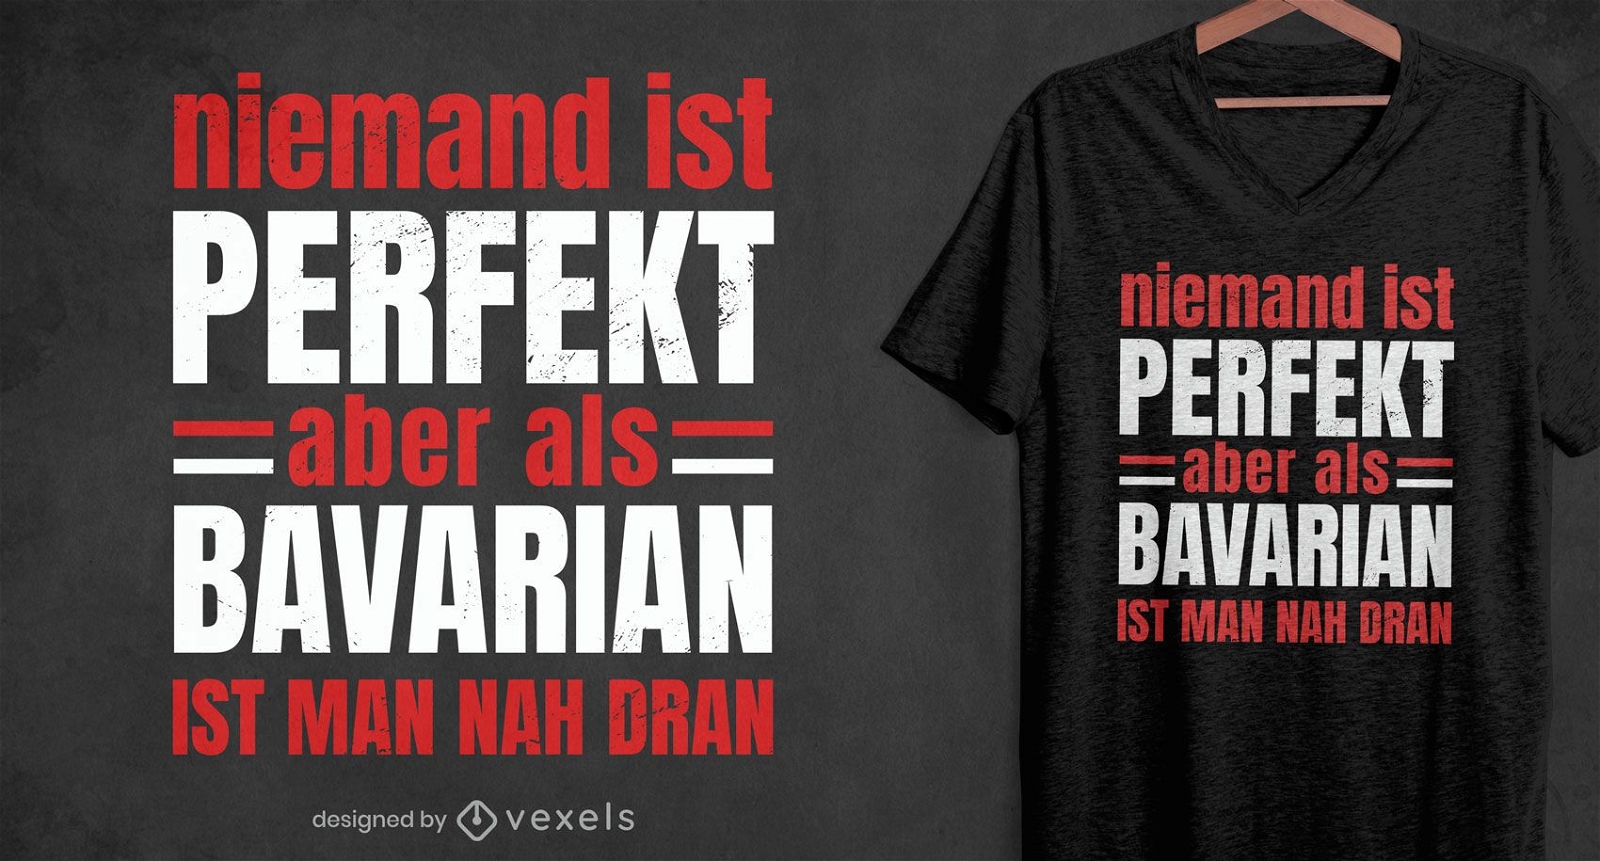 Bavarian German quote t-shirt design